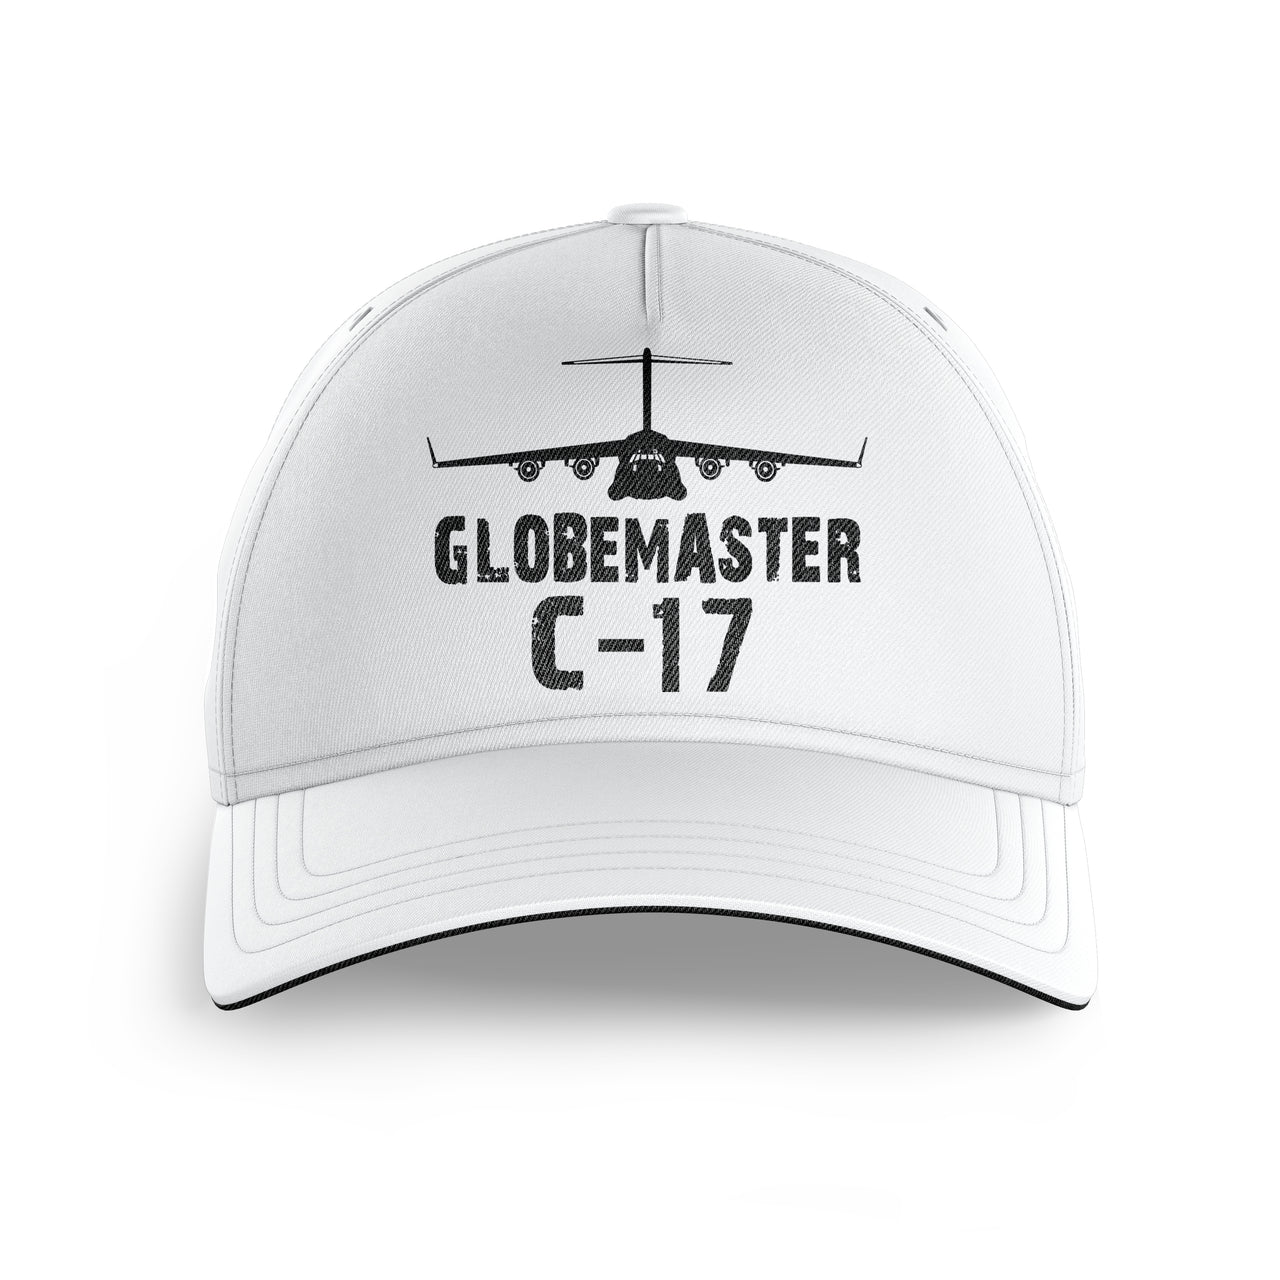 GlobeMaster C-17 & Plane Printed Hats